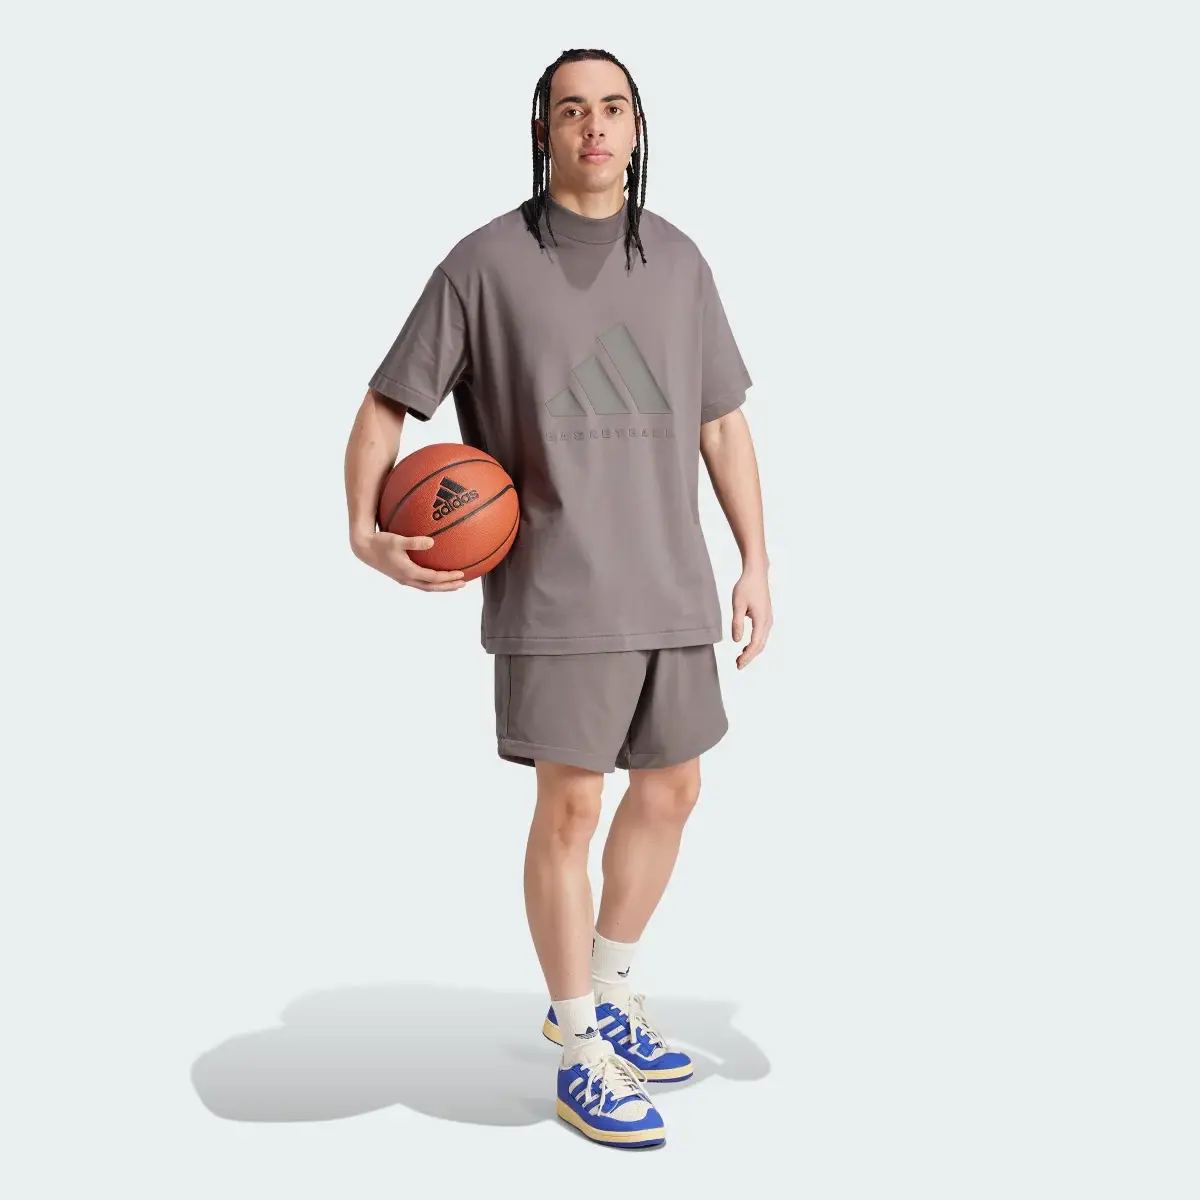 Adidas T-shirt_001 adidas Basketball. 3